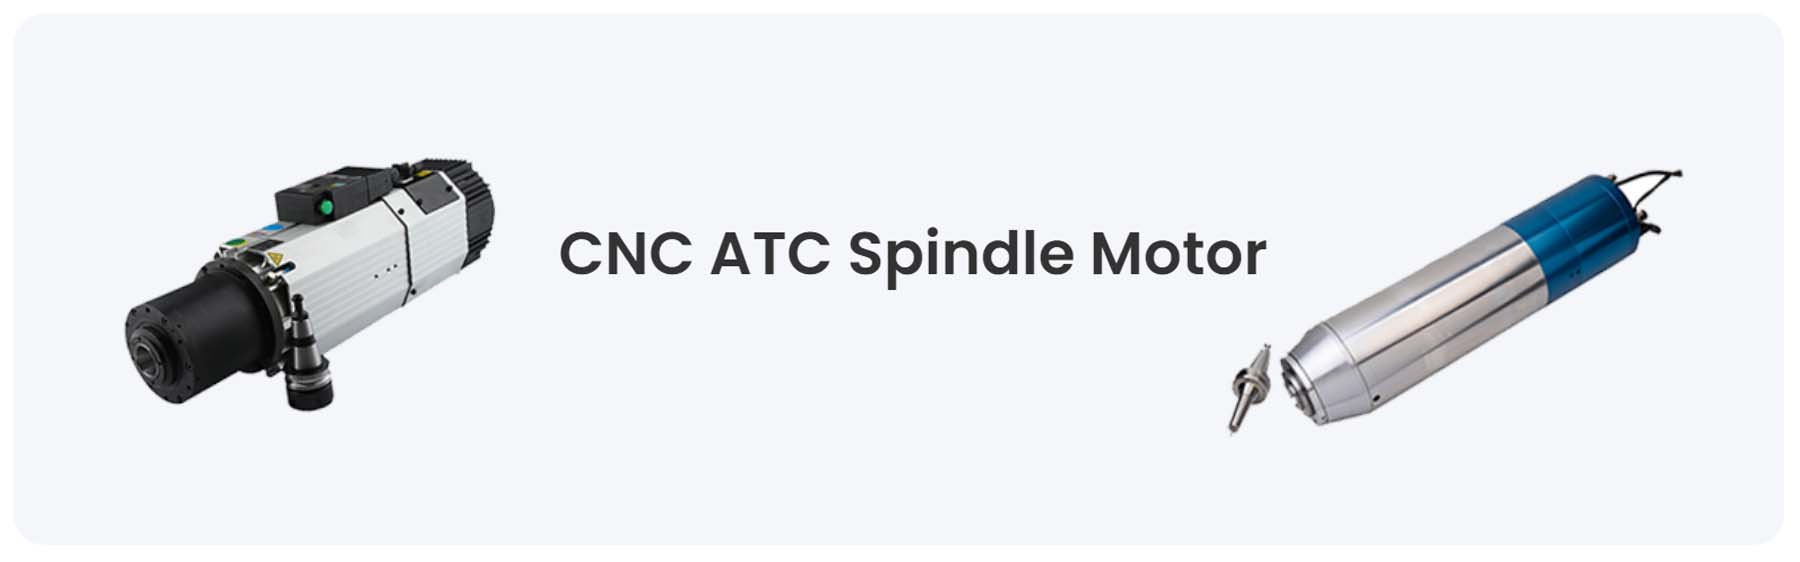 CNC ATC 스핀들 모터 - HOLRY 모터